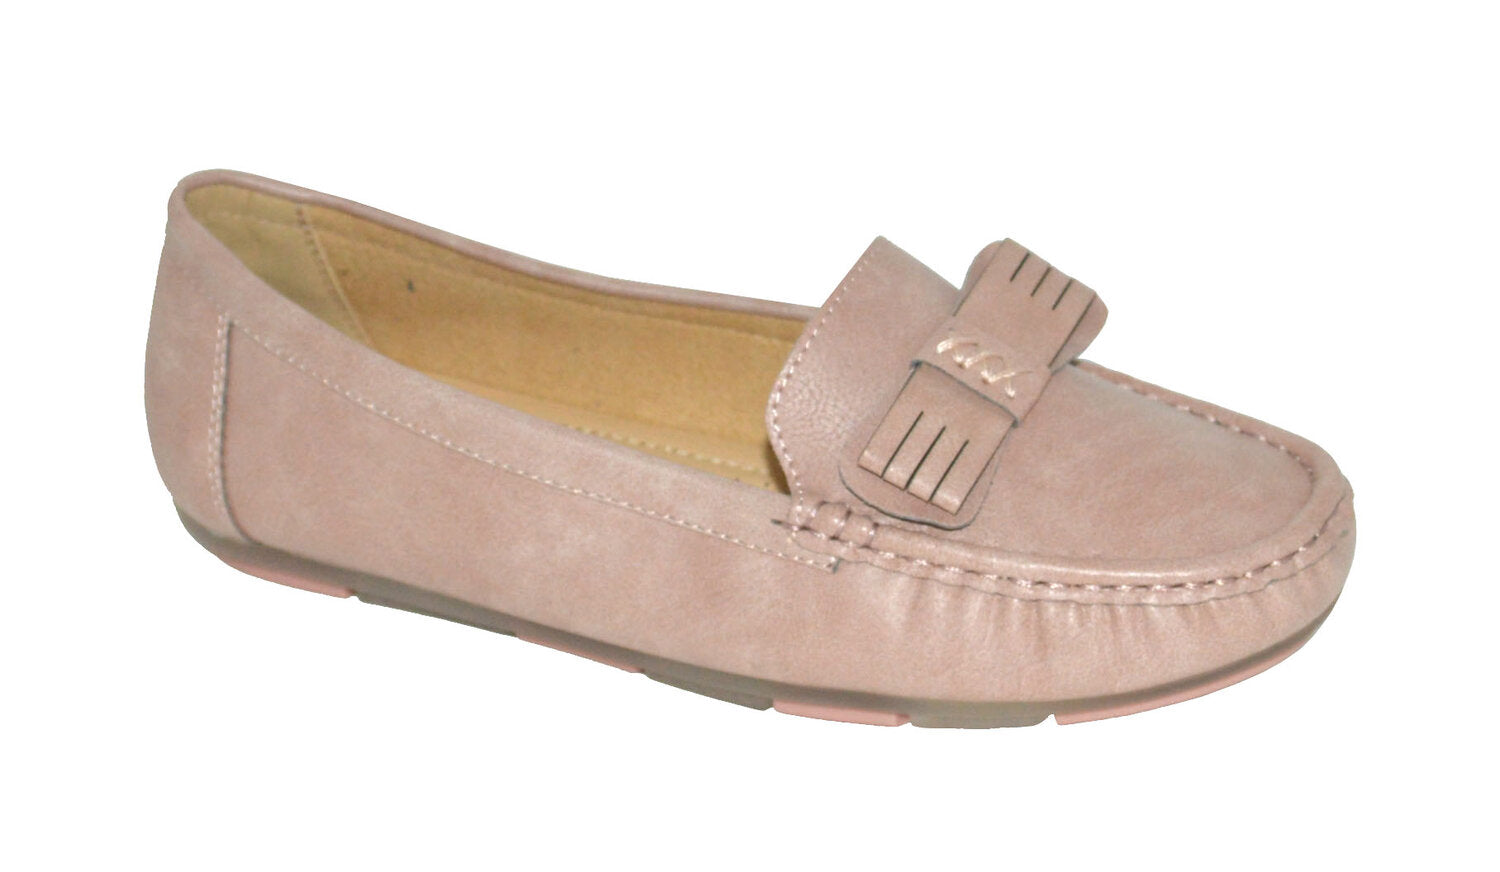 Wholesale Women's Shoes Loafer Ladies Slip On Zara NGj5